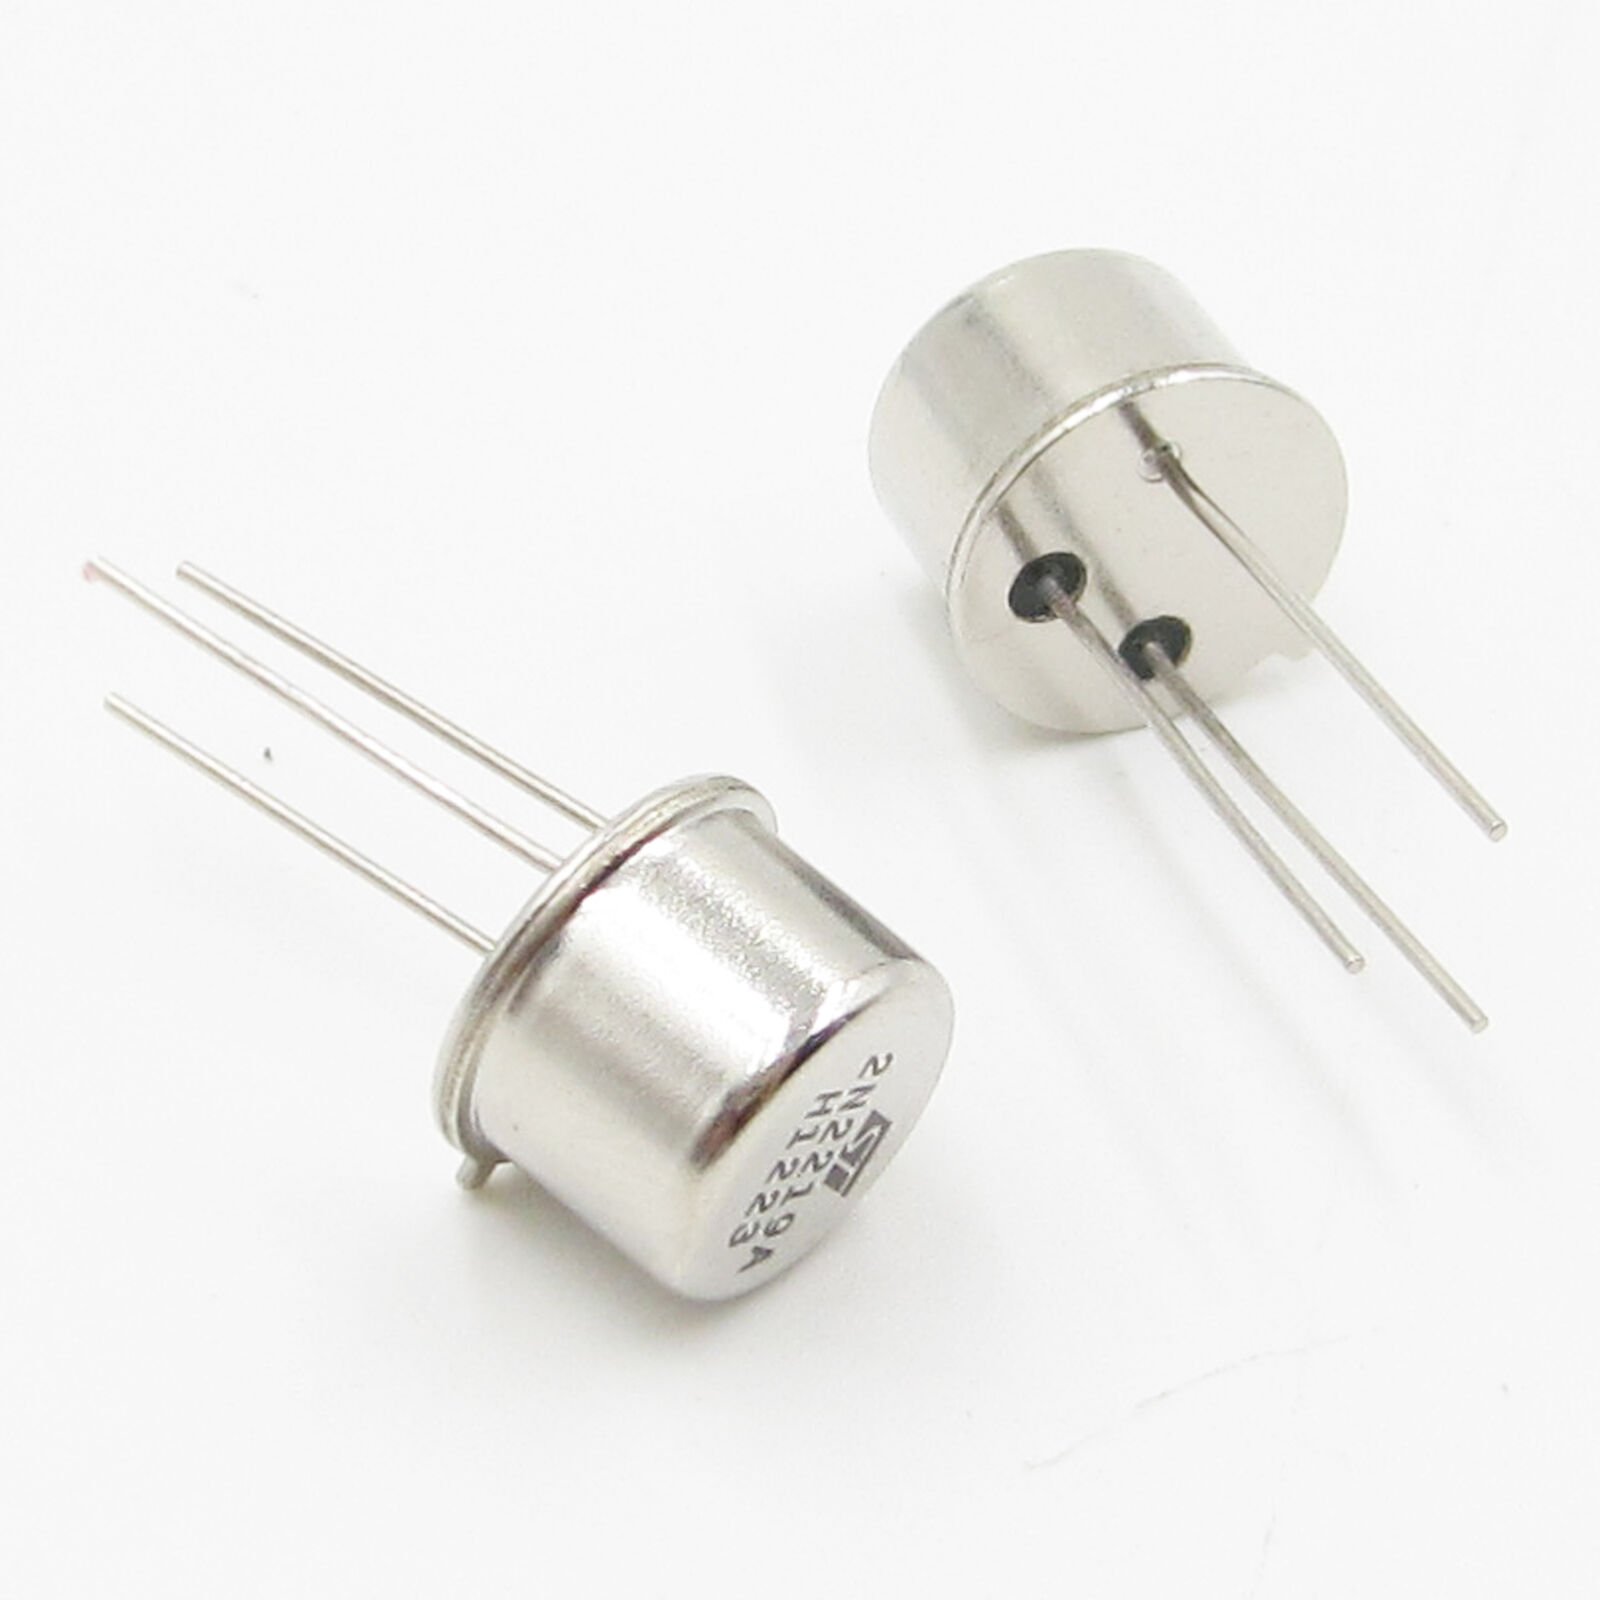 10PCS 2N2219A 2N2219 TO-39 Transistors TO-39 Transistors